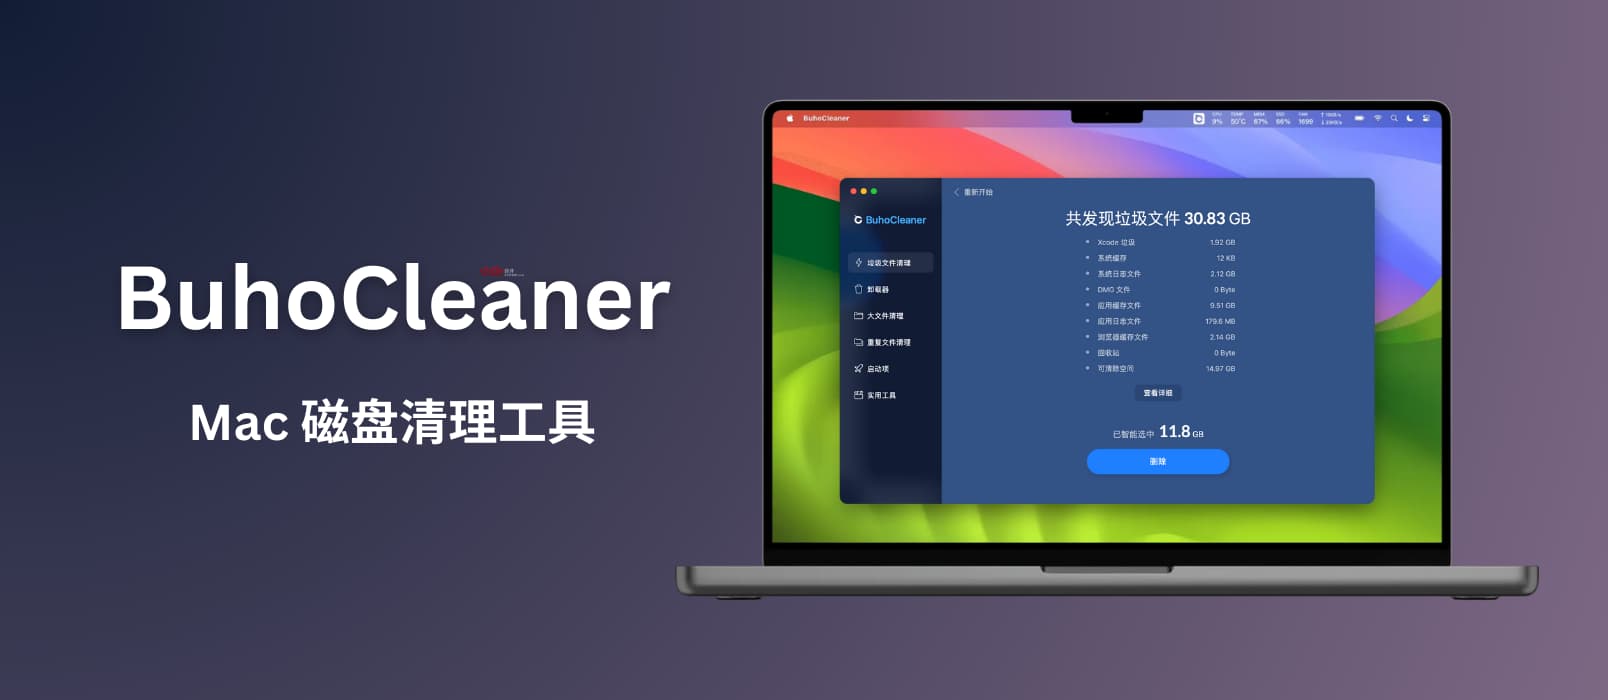 BuhoCleaner - 简洁优雅的 Mac 磁盘清理工具